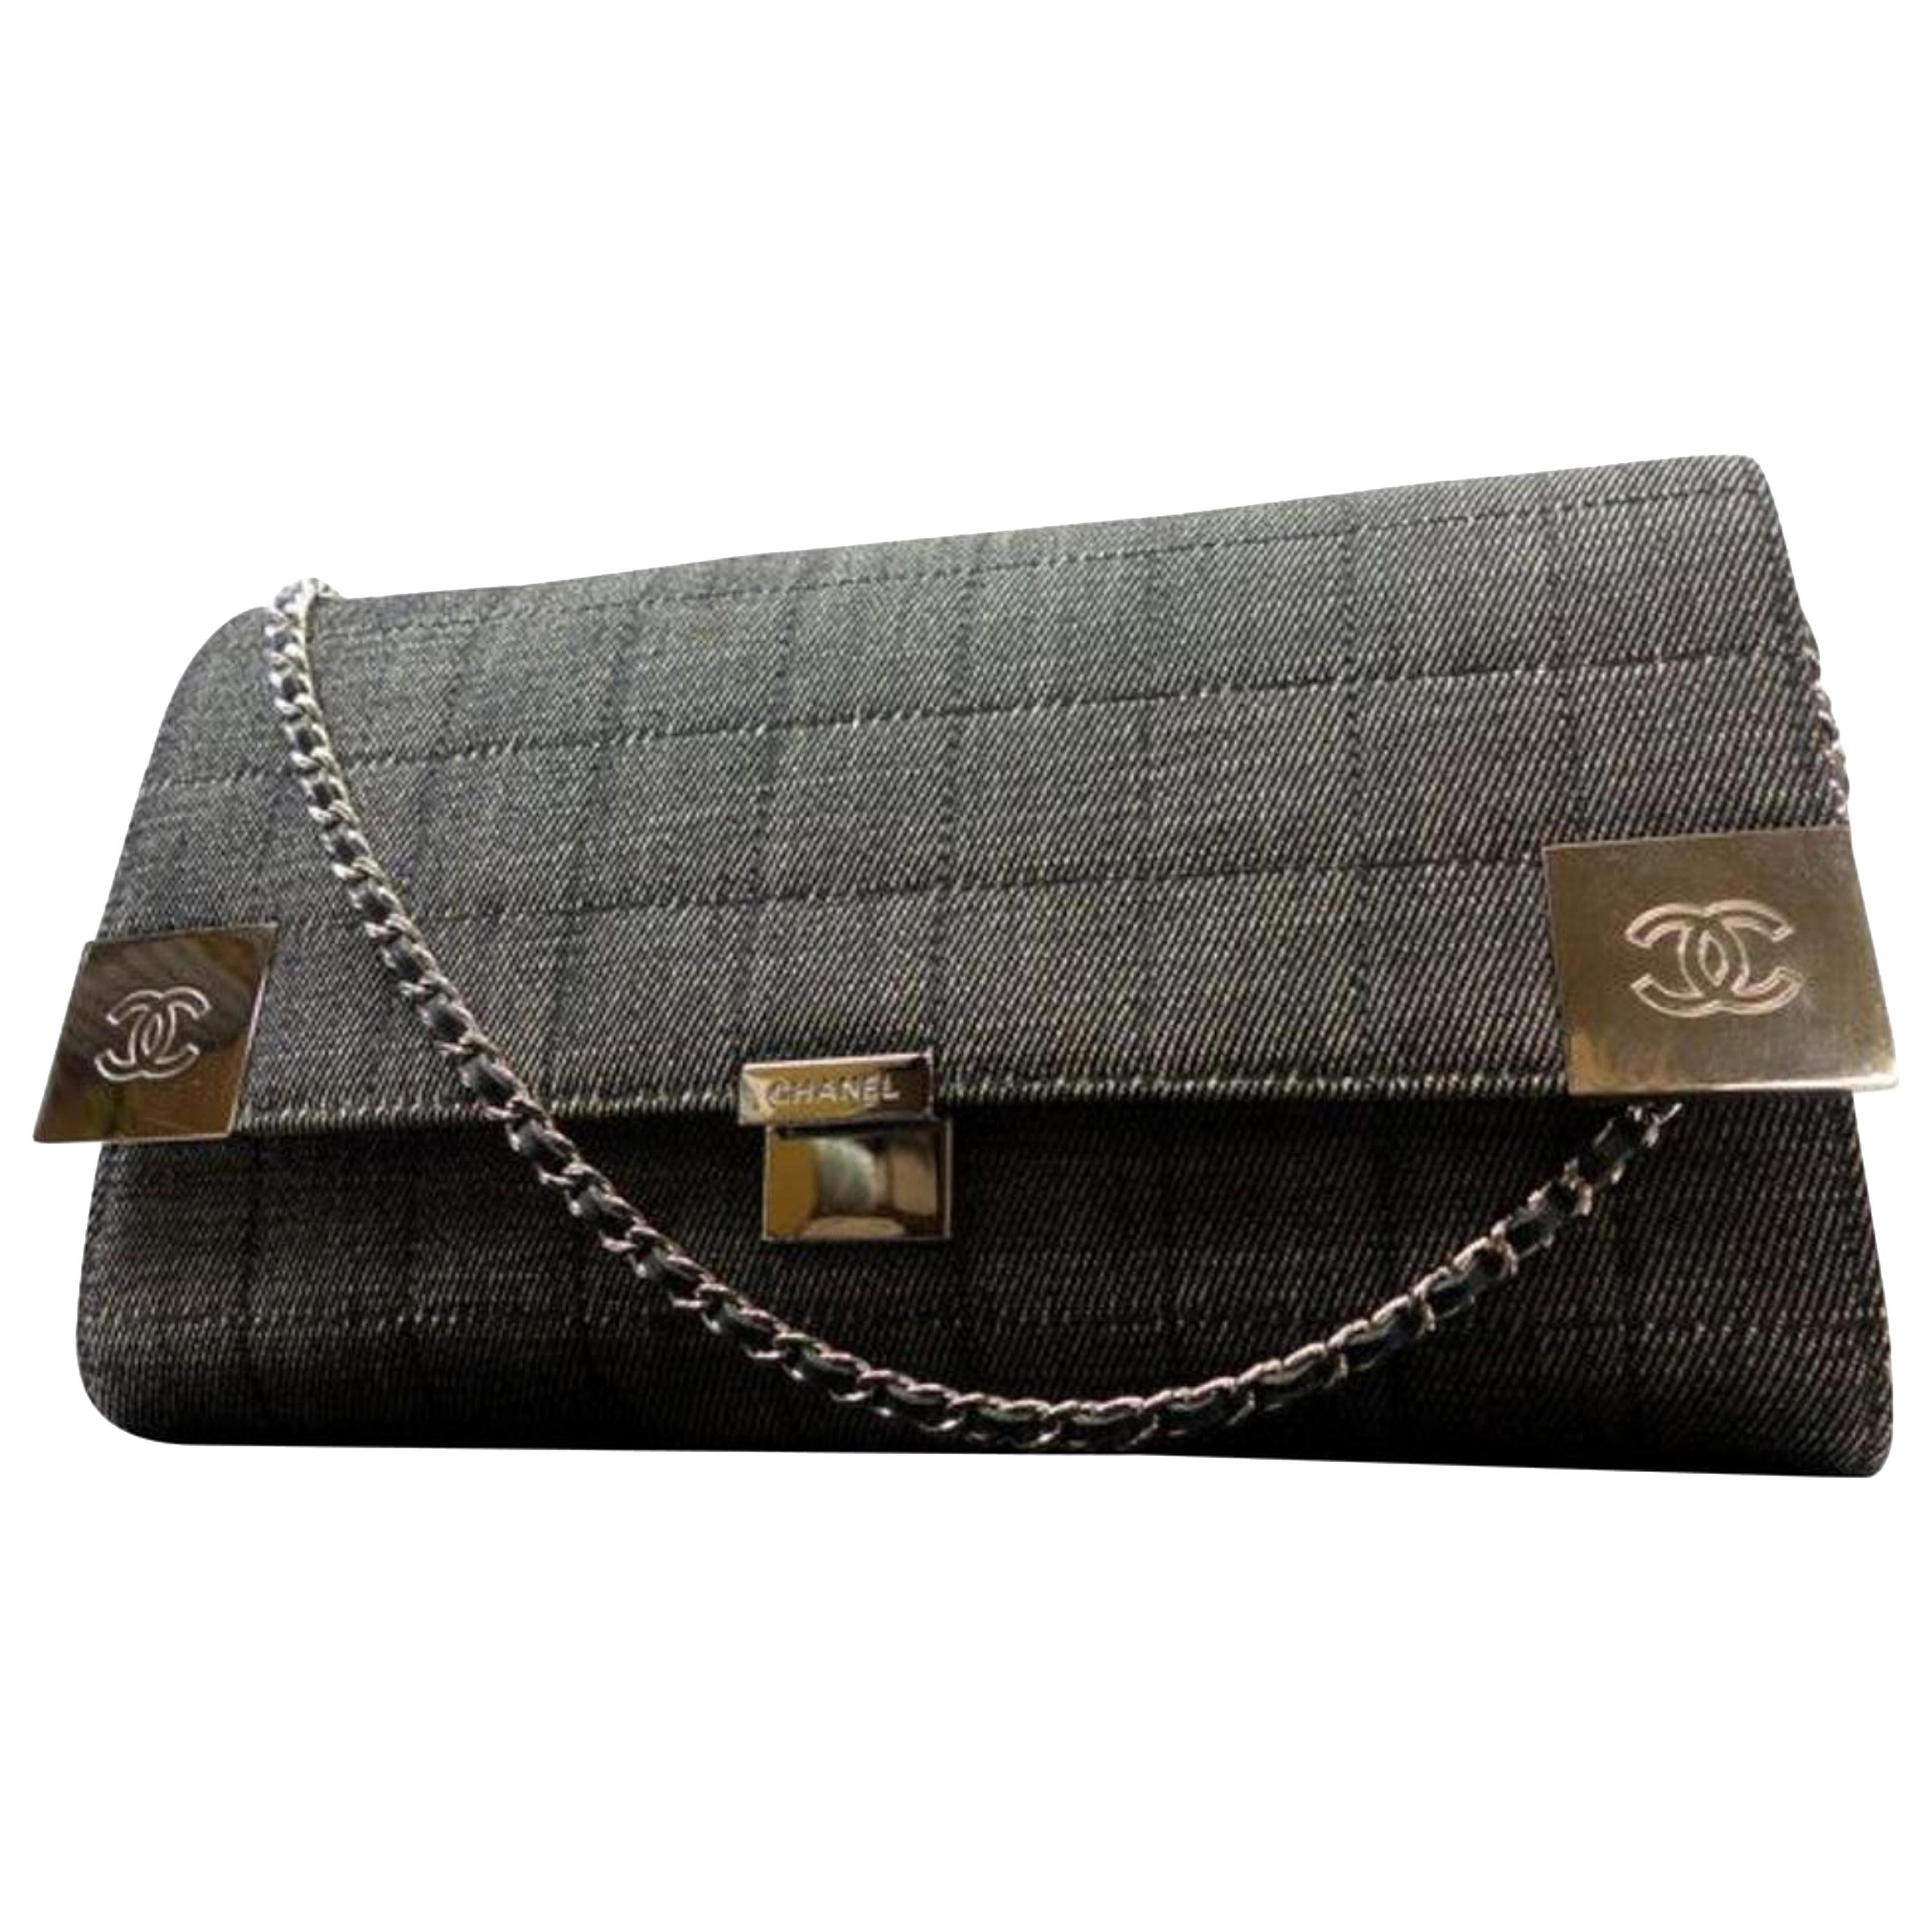 Chanel Wallet on Chain Charcoal Chocolate Bar Flap 228748 Denim Shoulder Bag For Sale